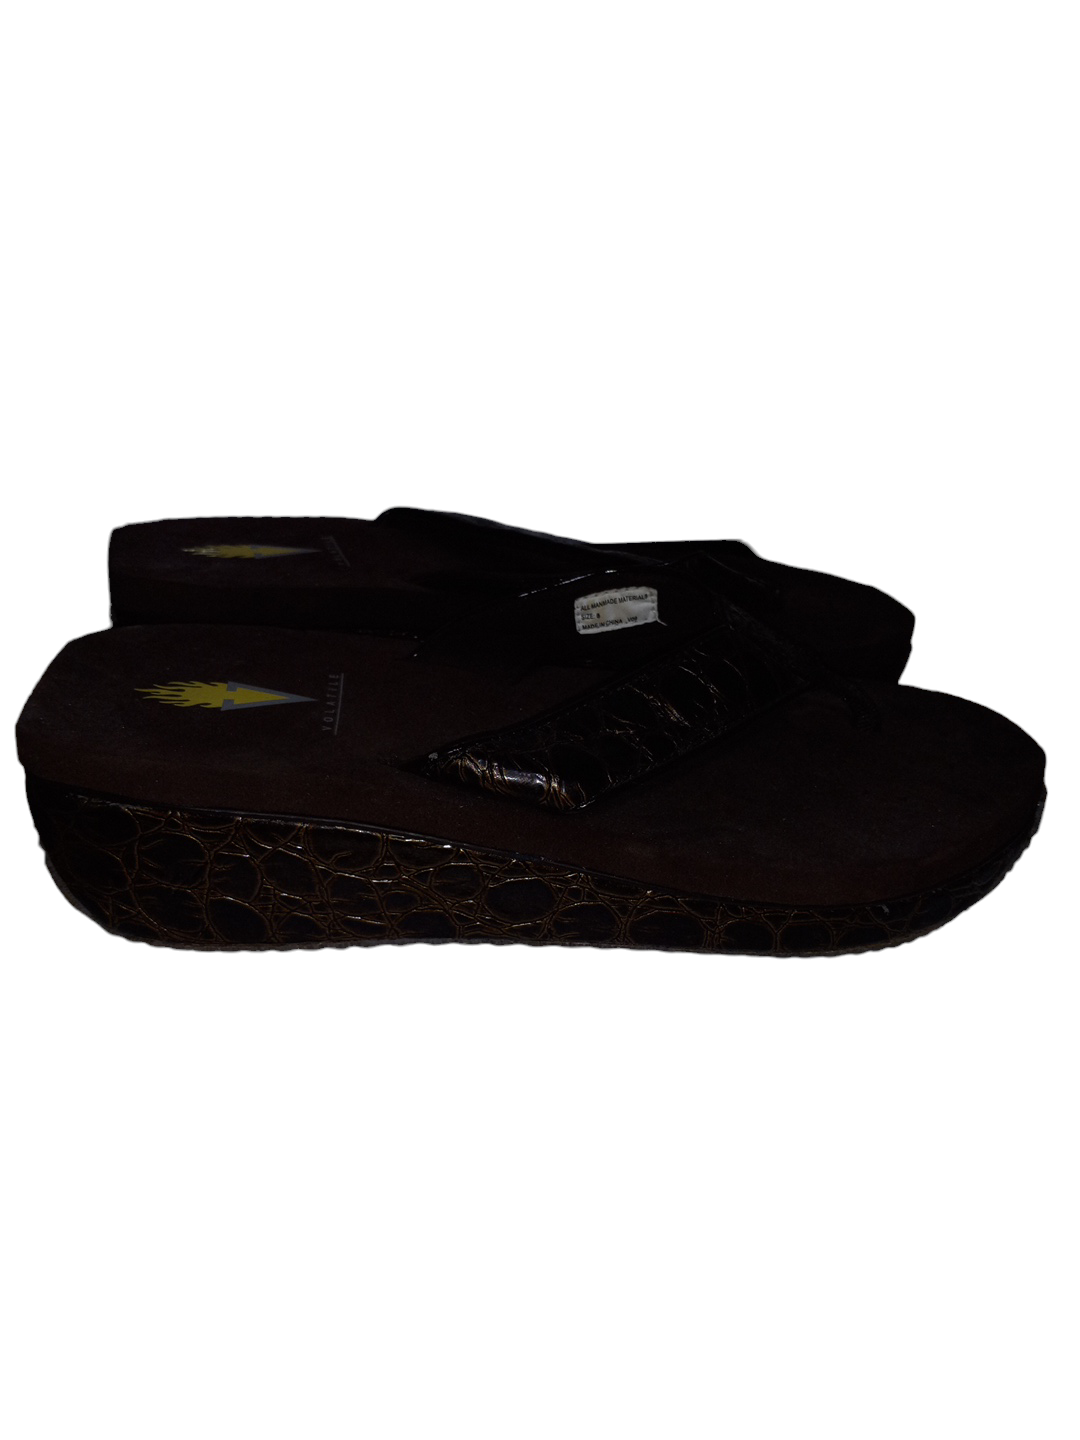 Brown Sandals Flip Flops Volatile, Size 8